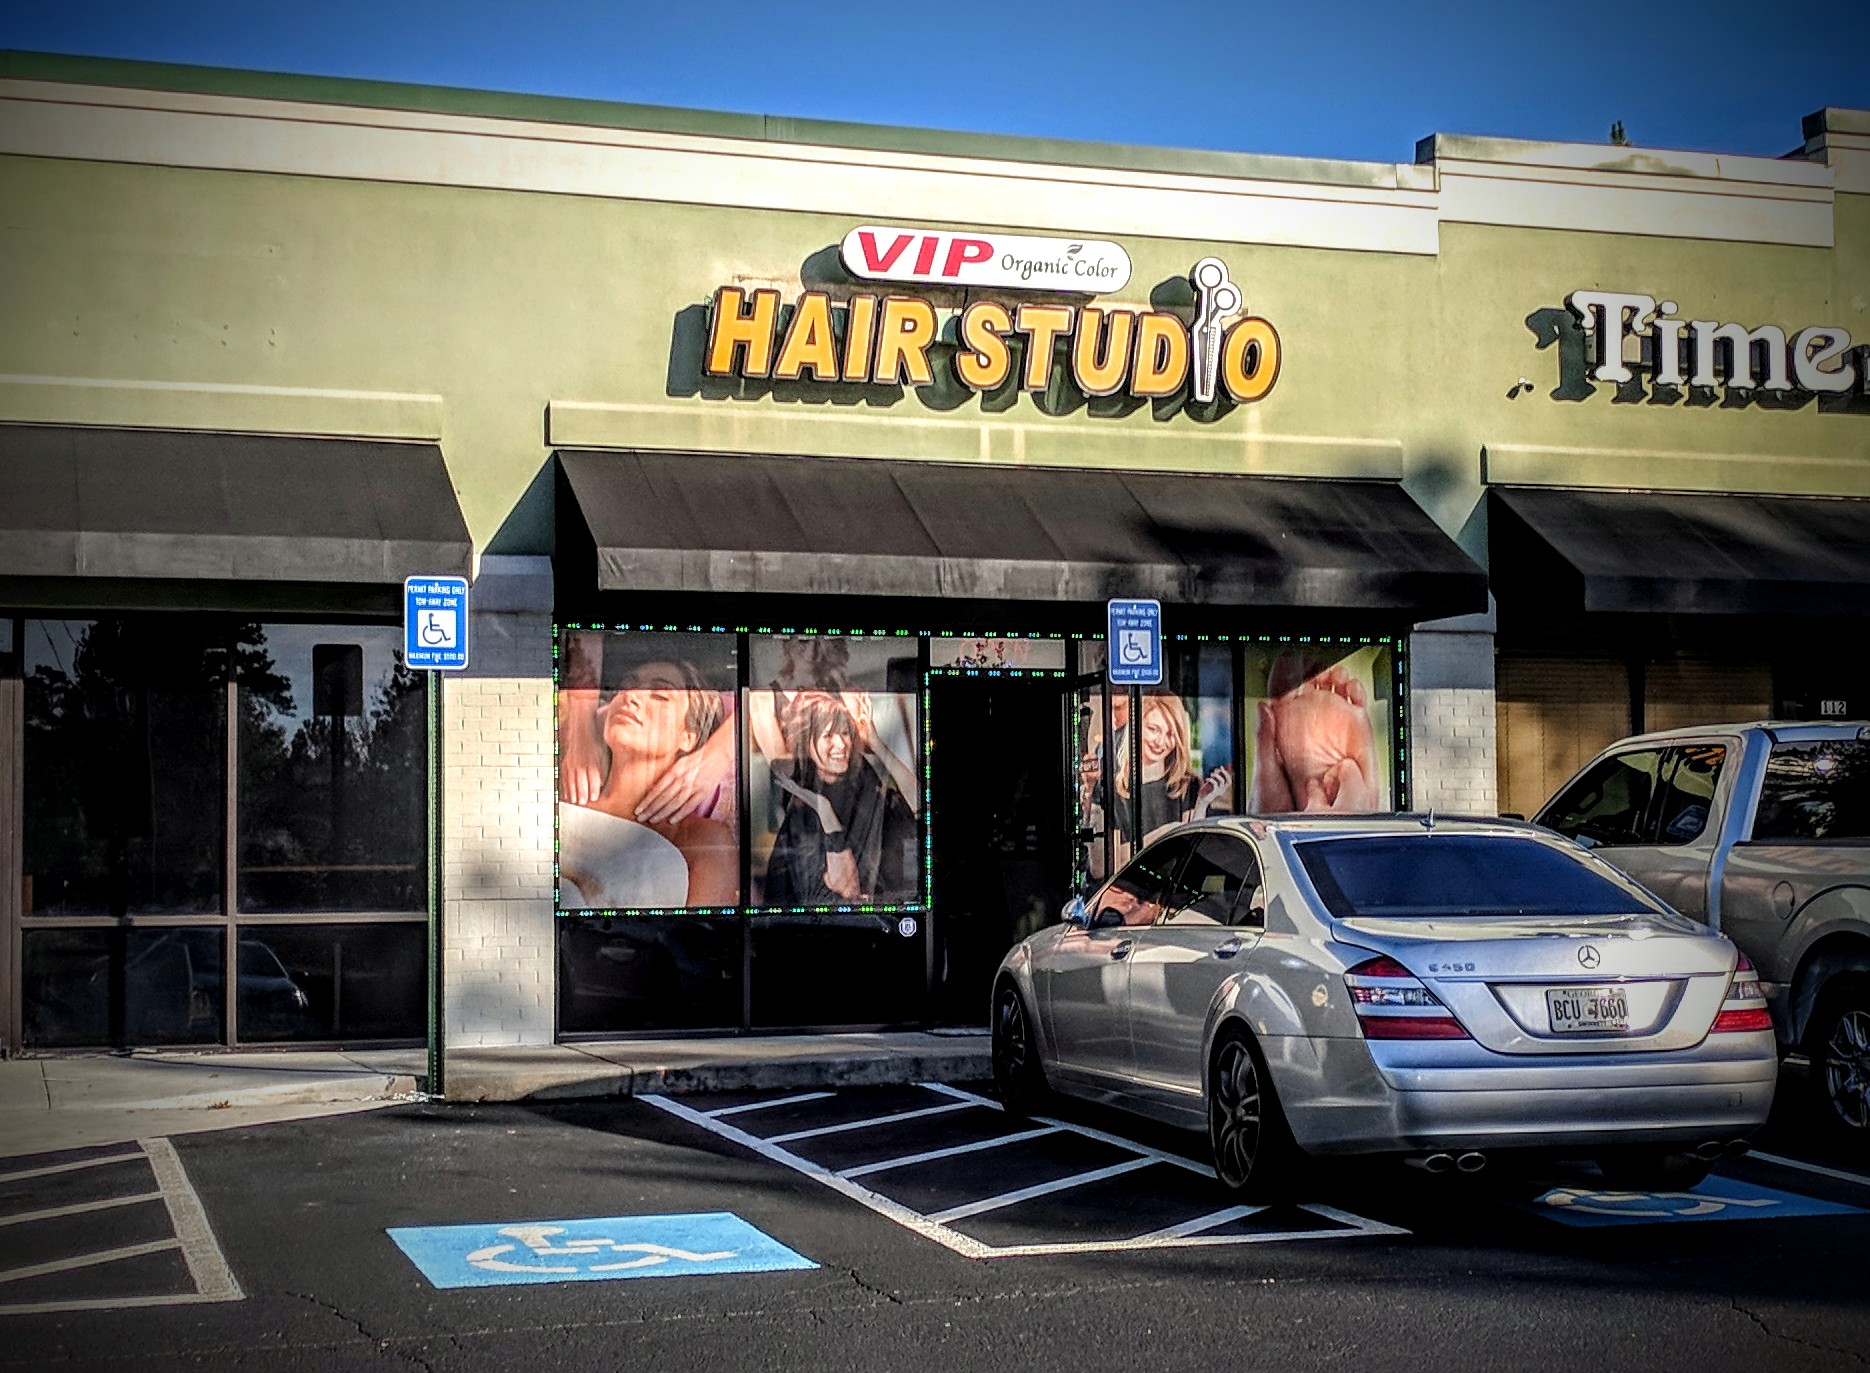 VIP Hair studio